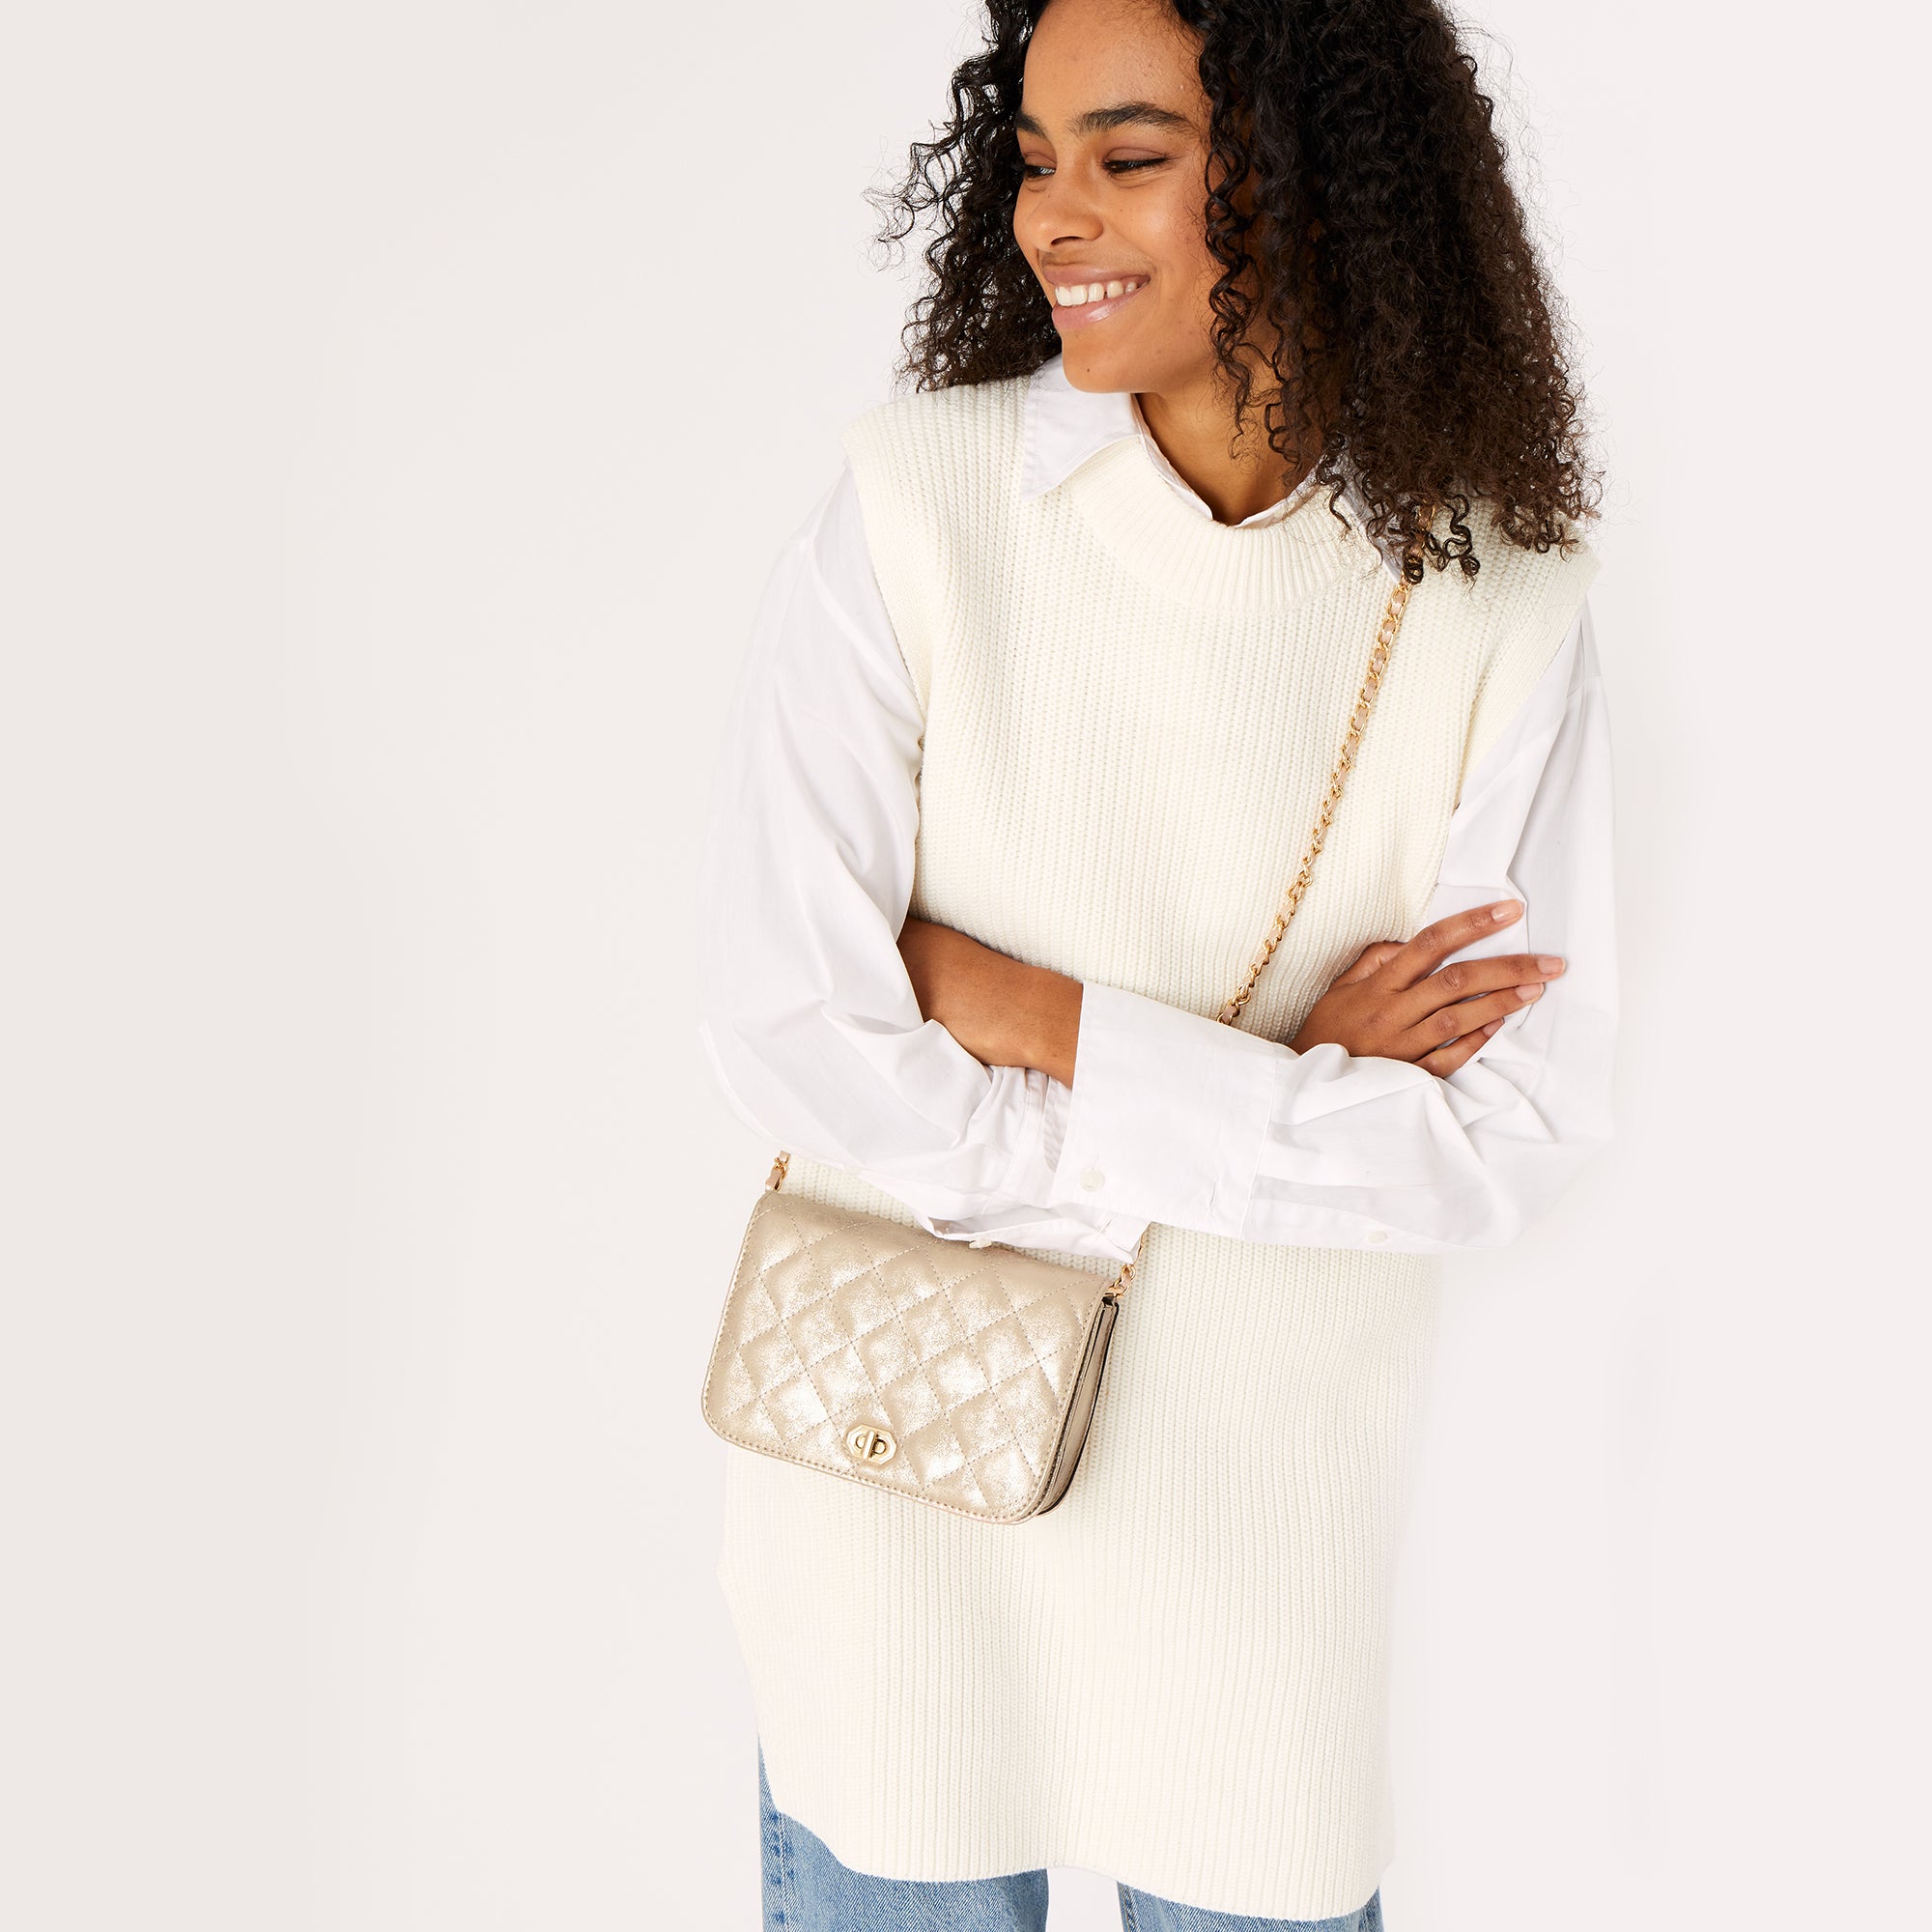 Chanel White Tote Bags - Tote Bags | White chanel bag, Chanel shoulder bag,  Chanel bag